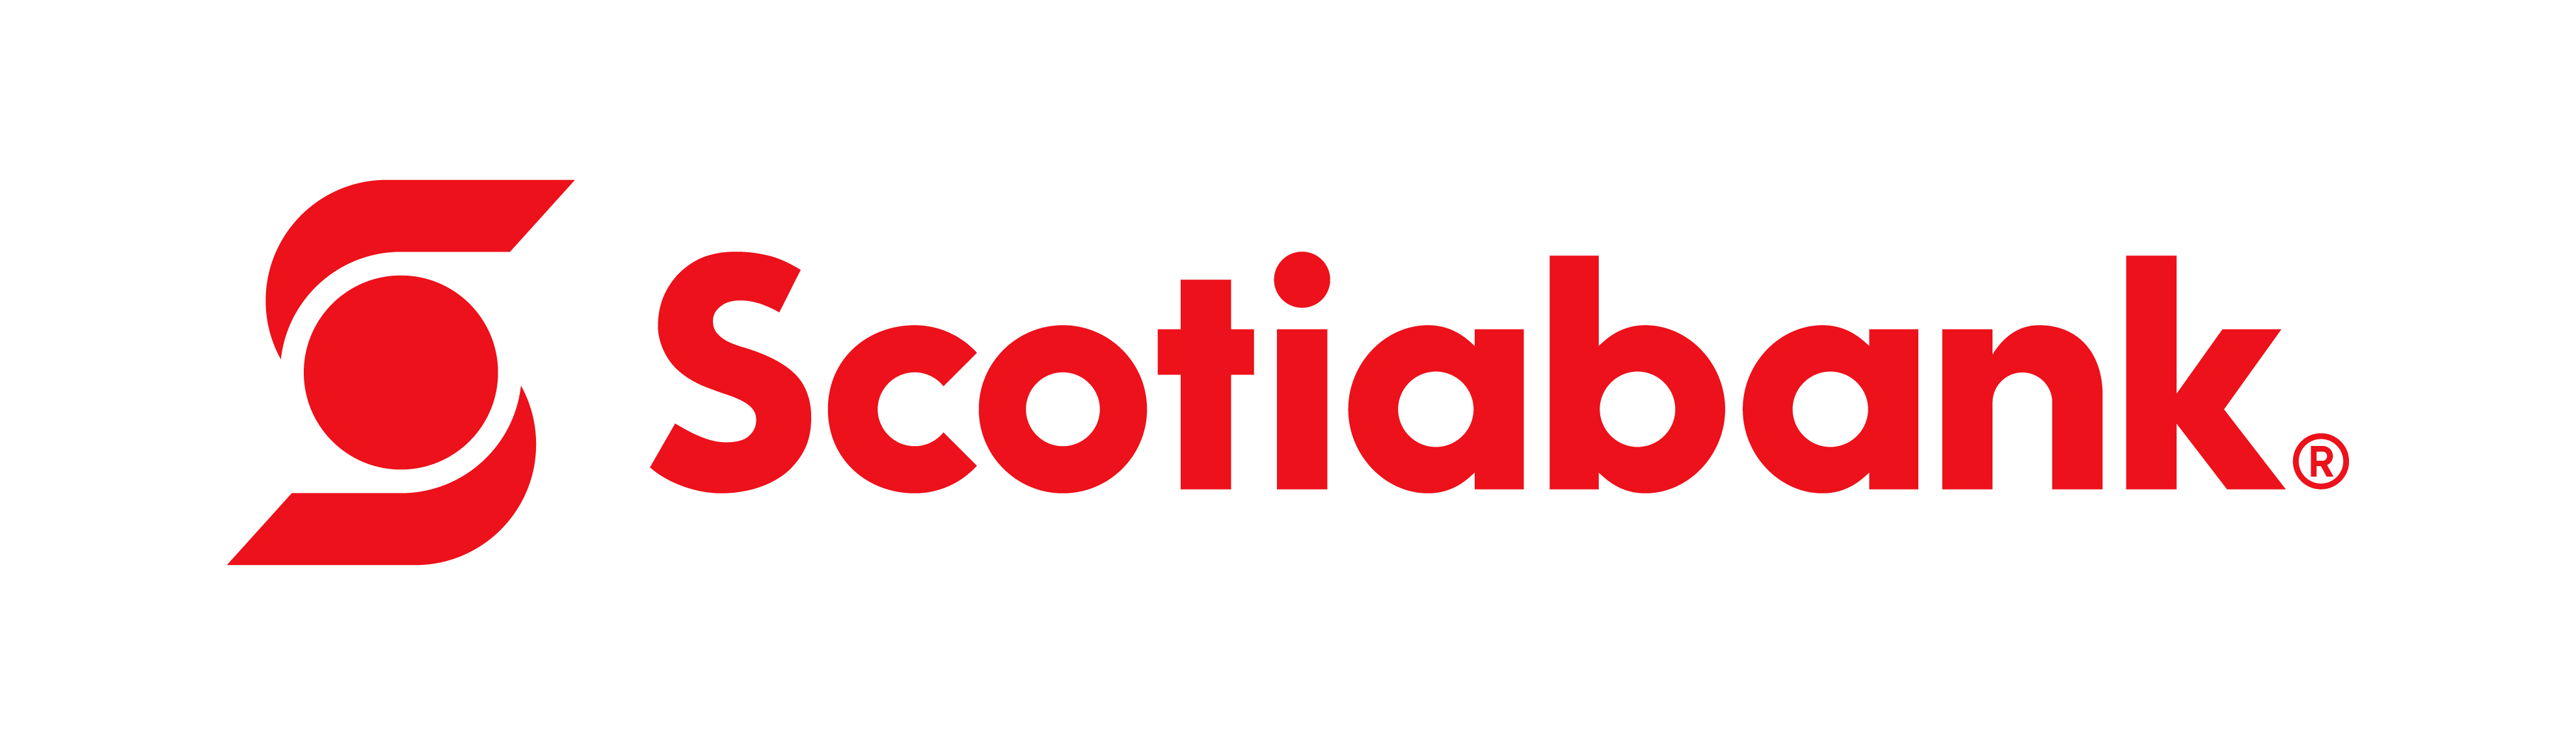 https://ppforum.ca/wp-content/uploads/2021/04/Scotiabank_logo_corporate_2021-1.png